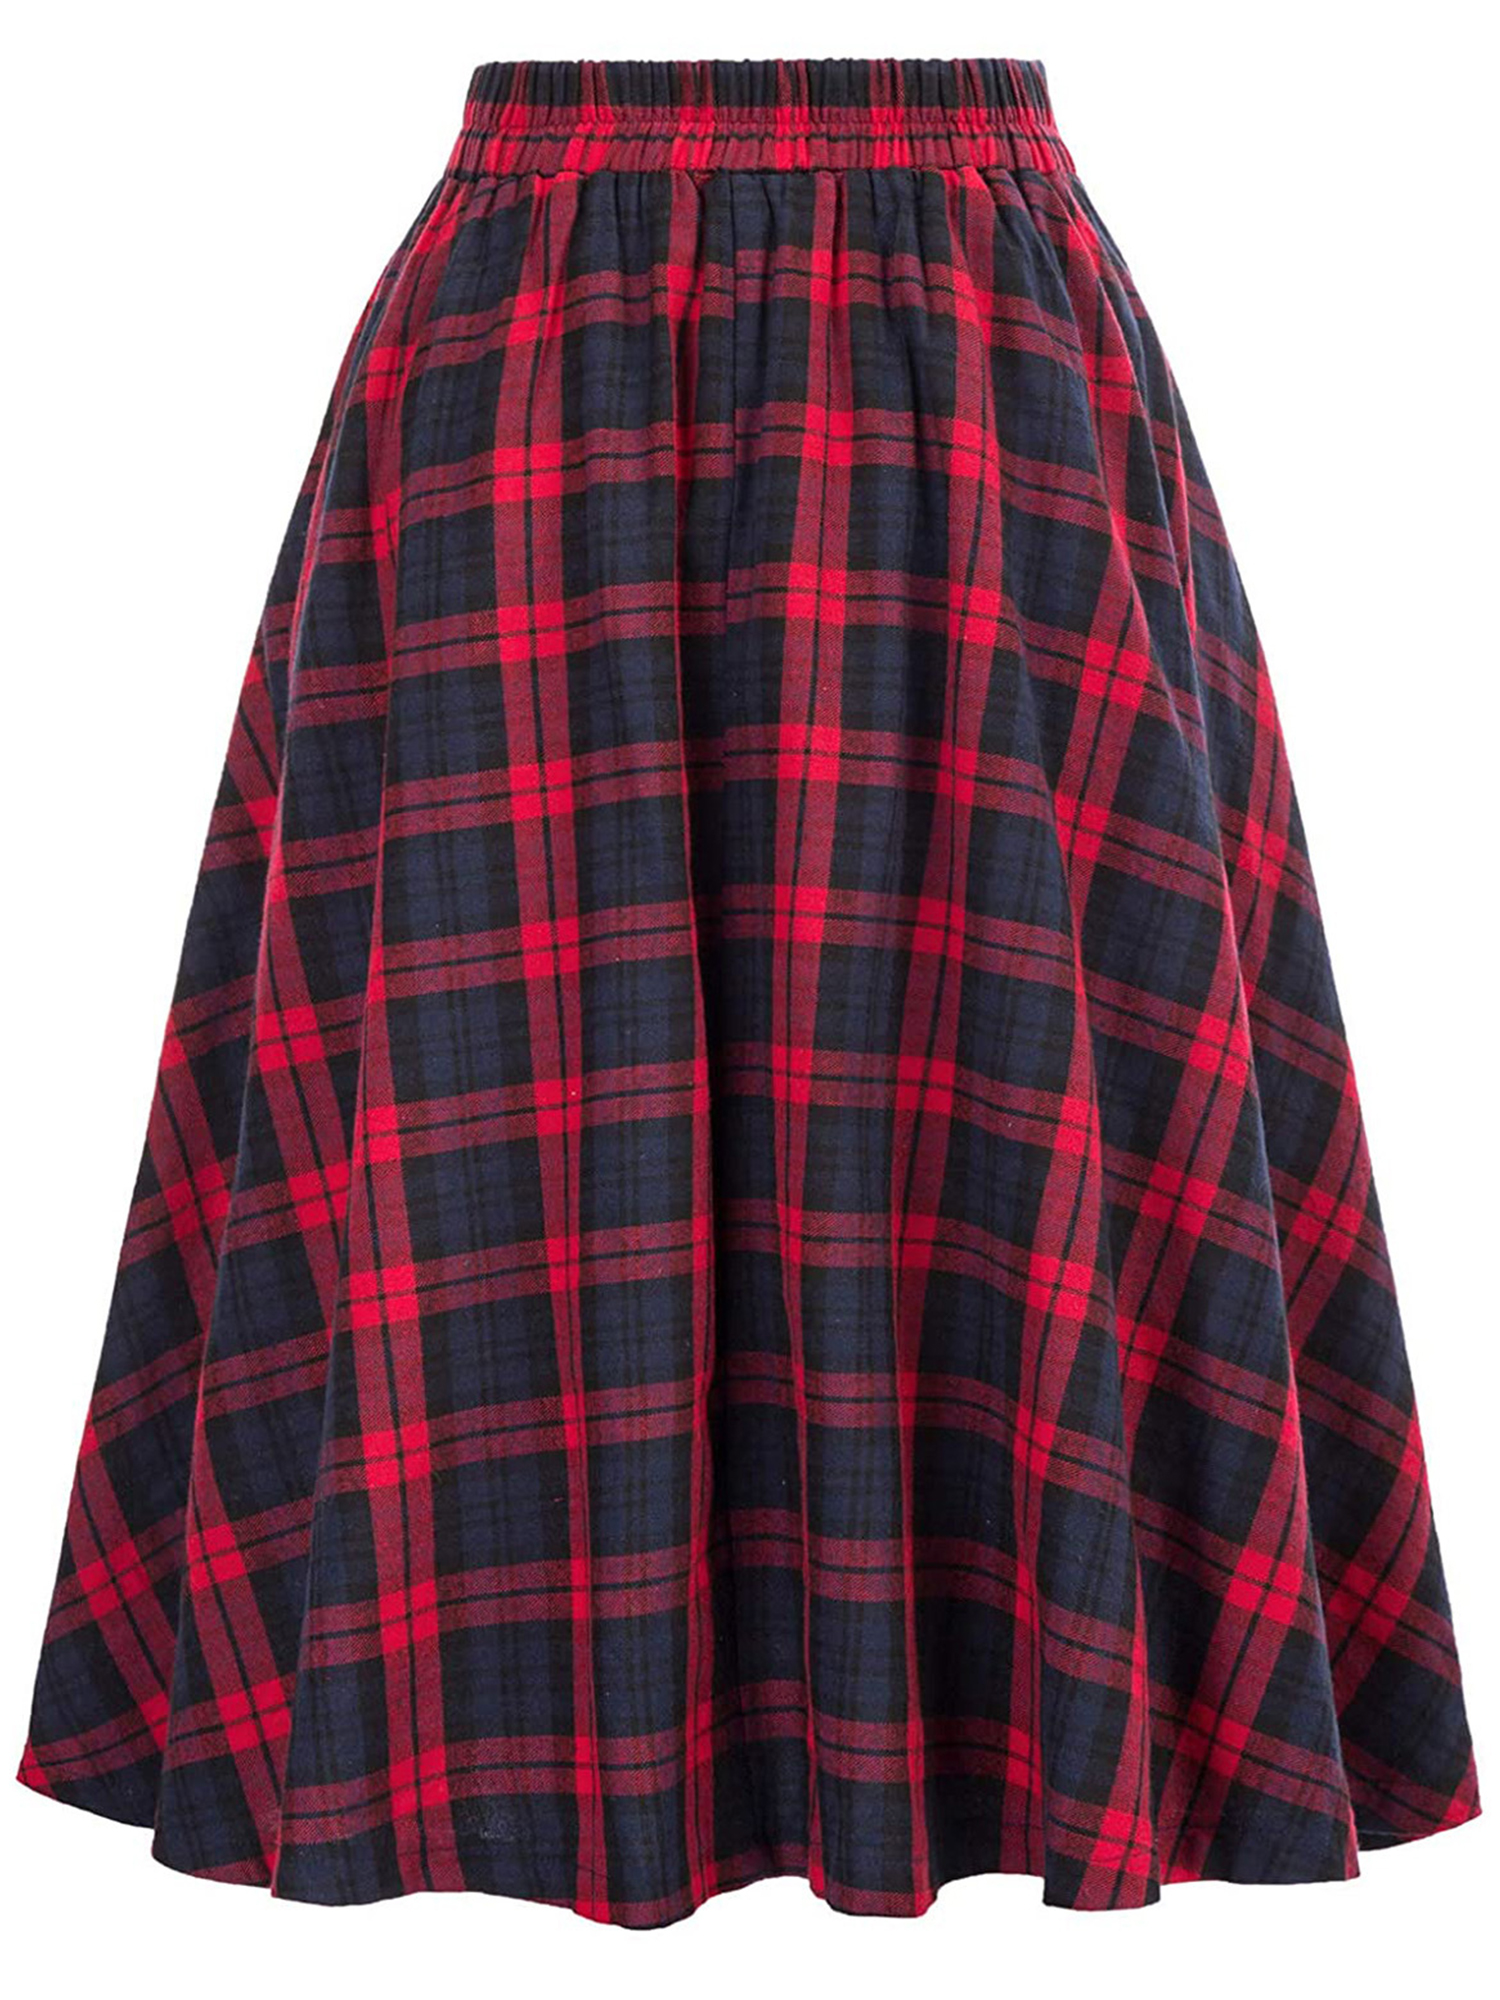 UKAP Plaid Tartan Skirts for Women Winter Vintage High Elastic Waist ...